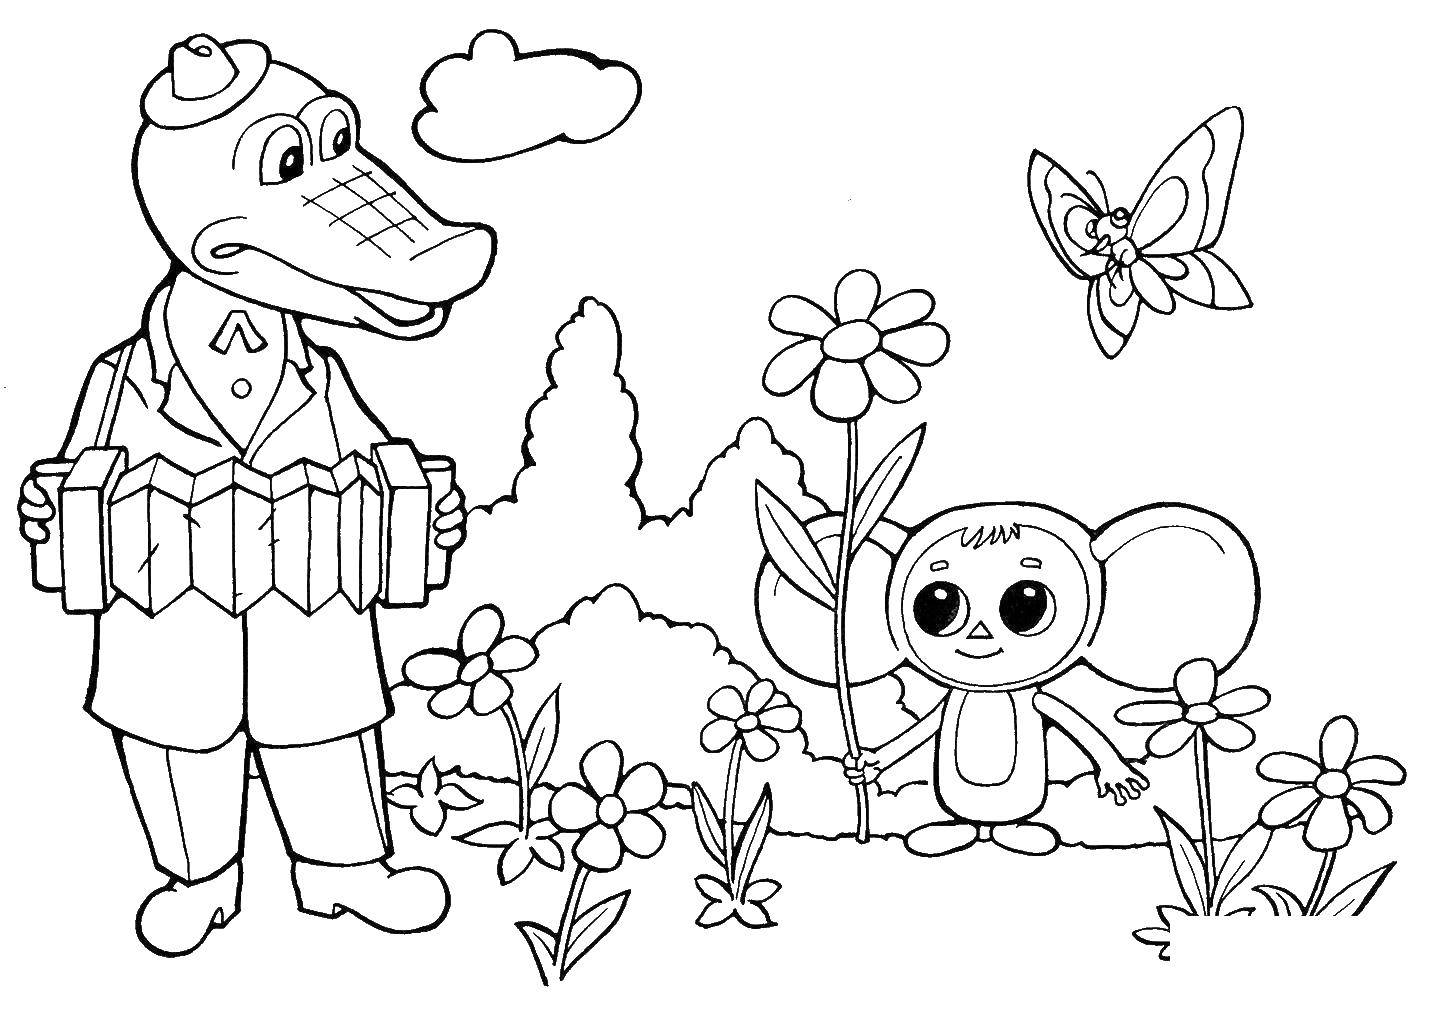 Coloring Crocodile Gena and Cheburashka. Category cartoons. Tags:  Cheburashka, Gena.